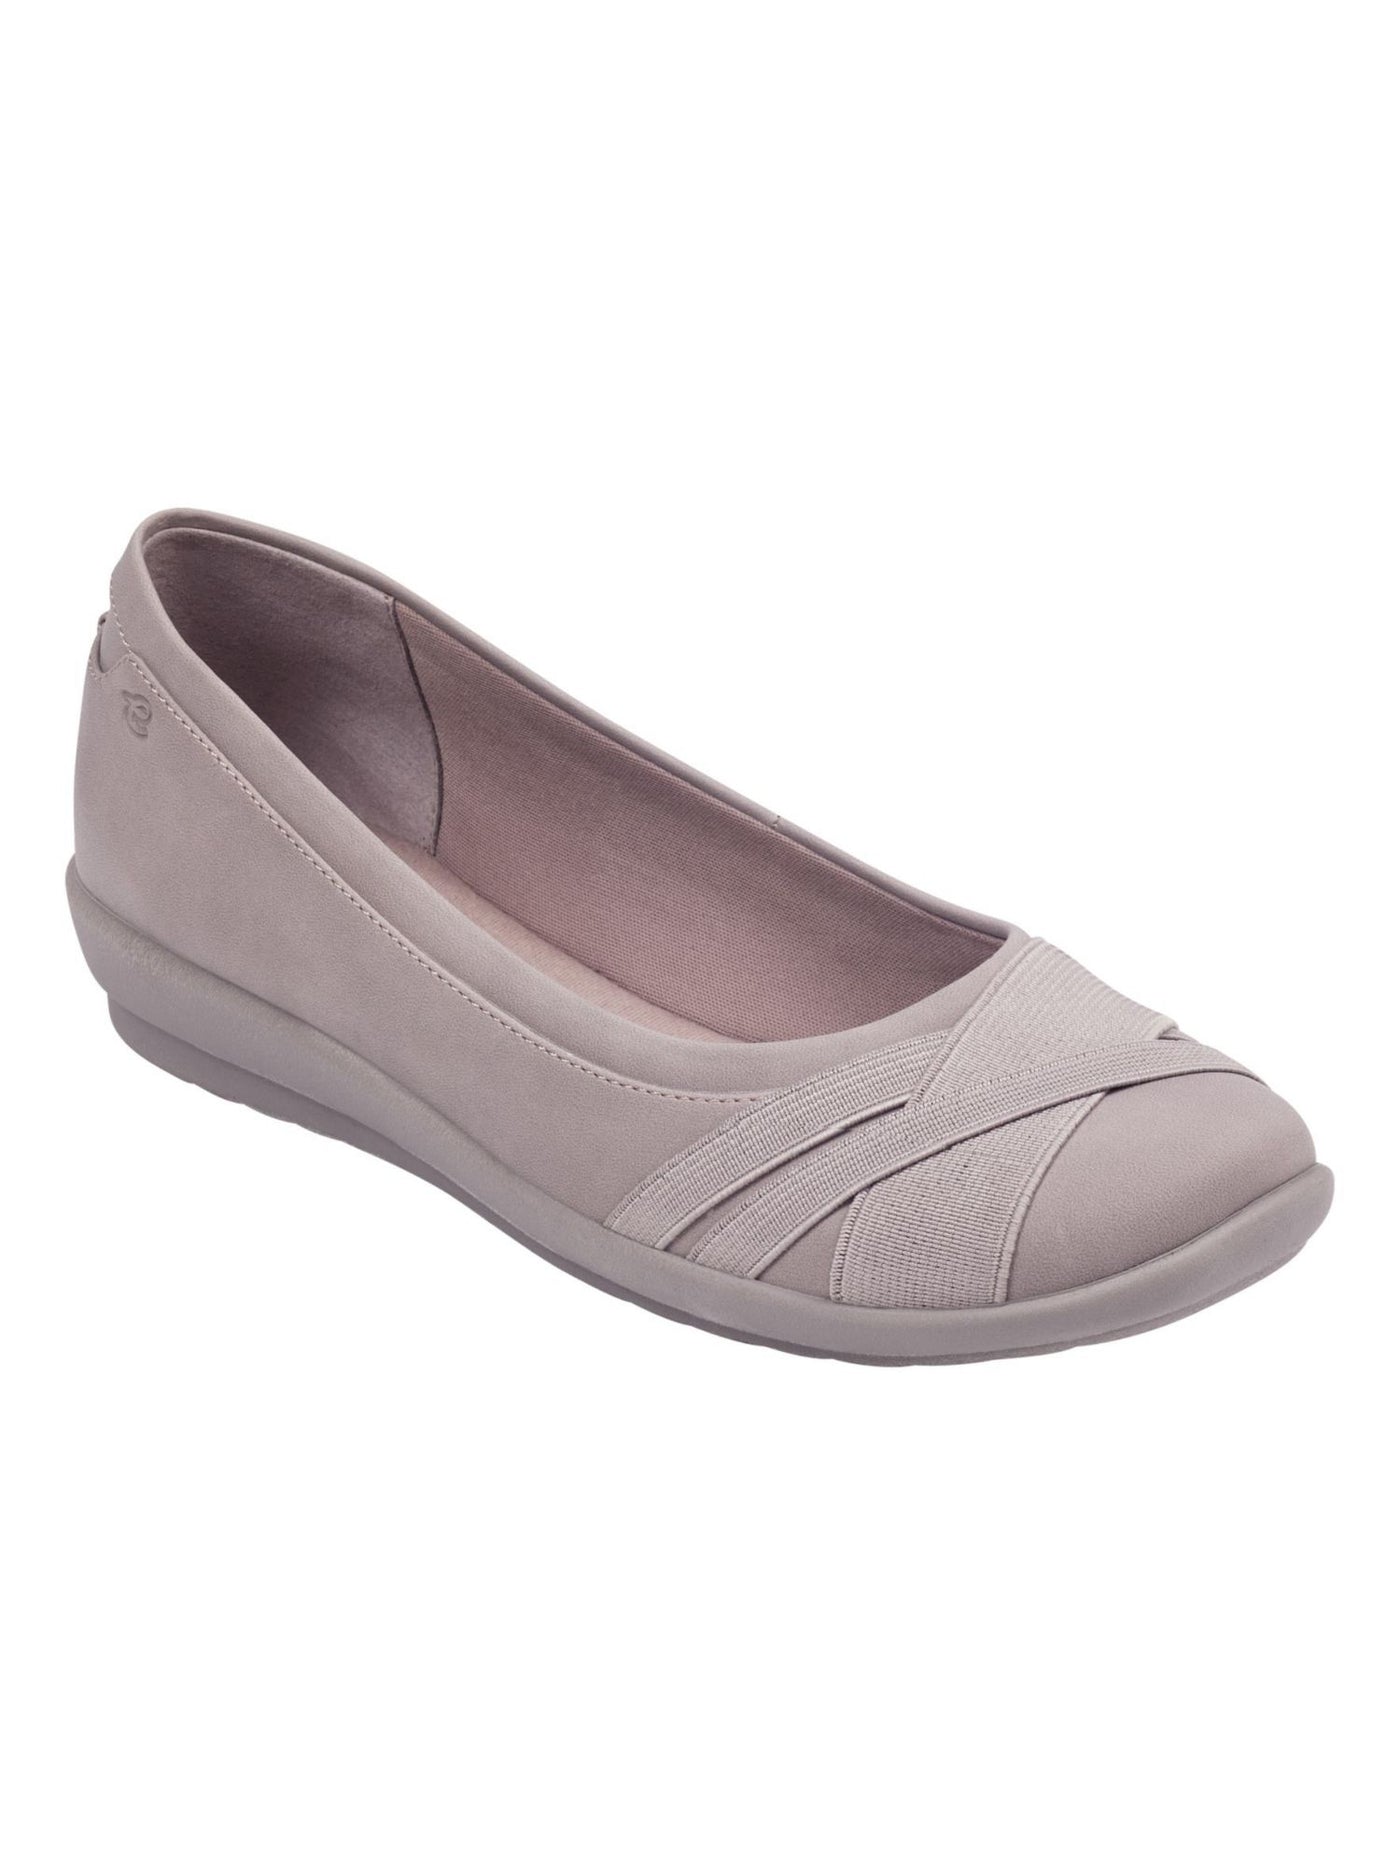 EASY SPIRIT Womens Beige Cushioned Acasia Round Toe Slip On Flats Shoes 5 M